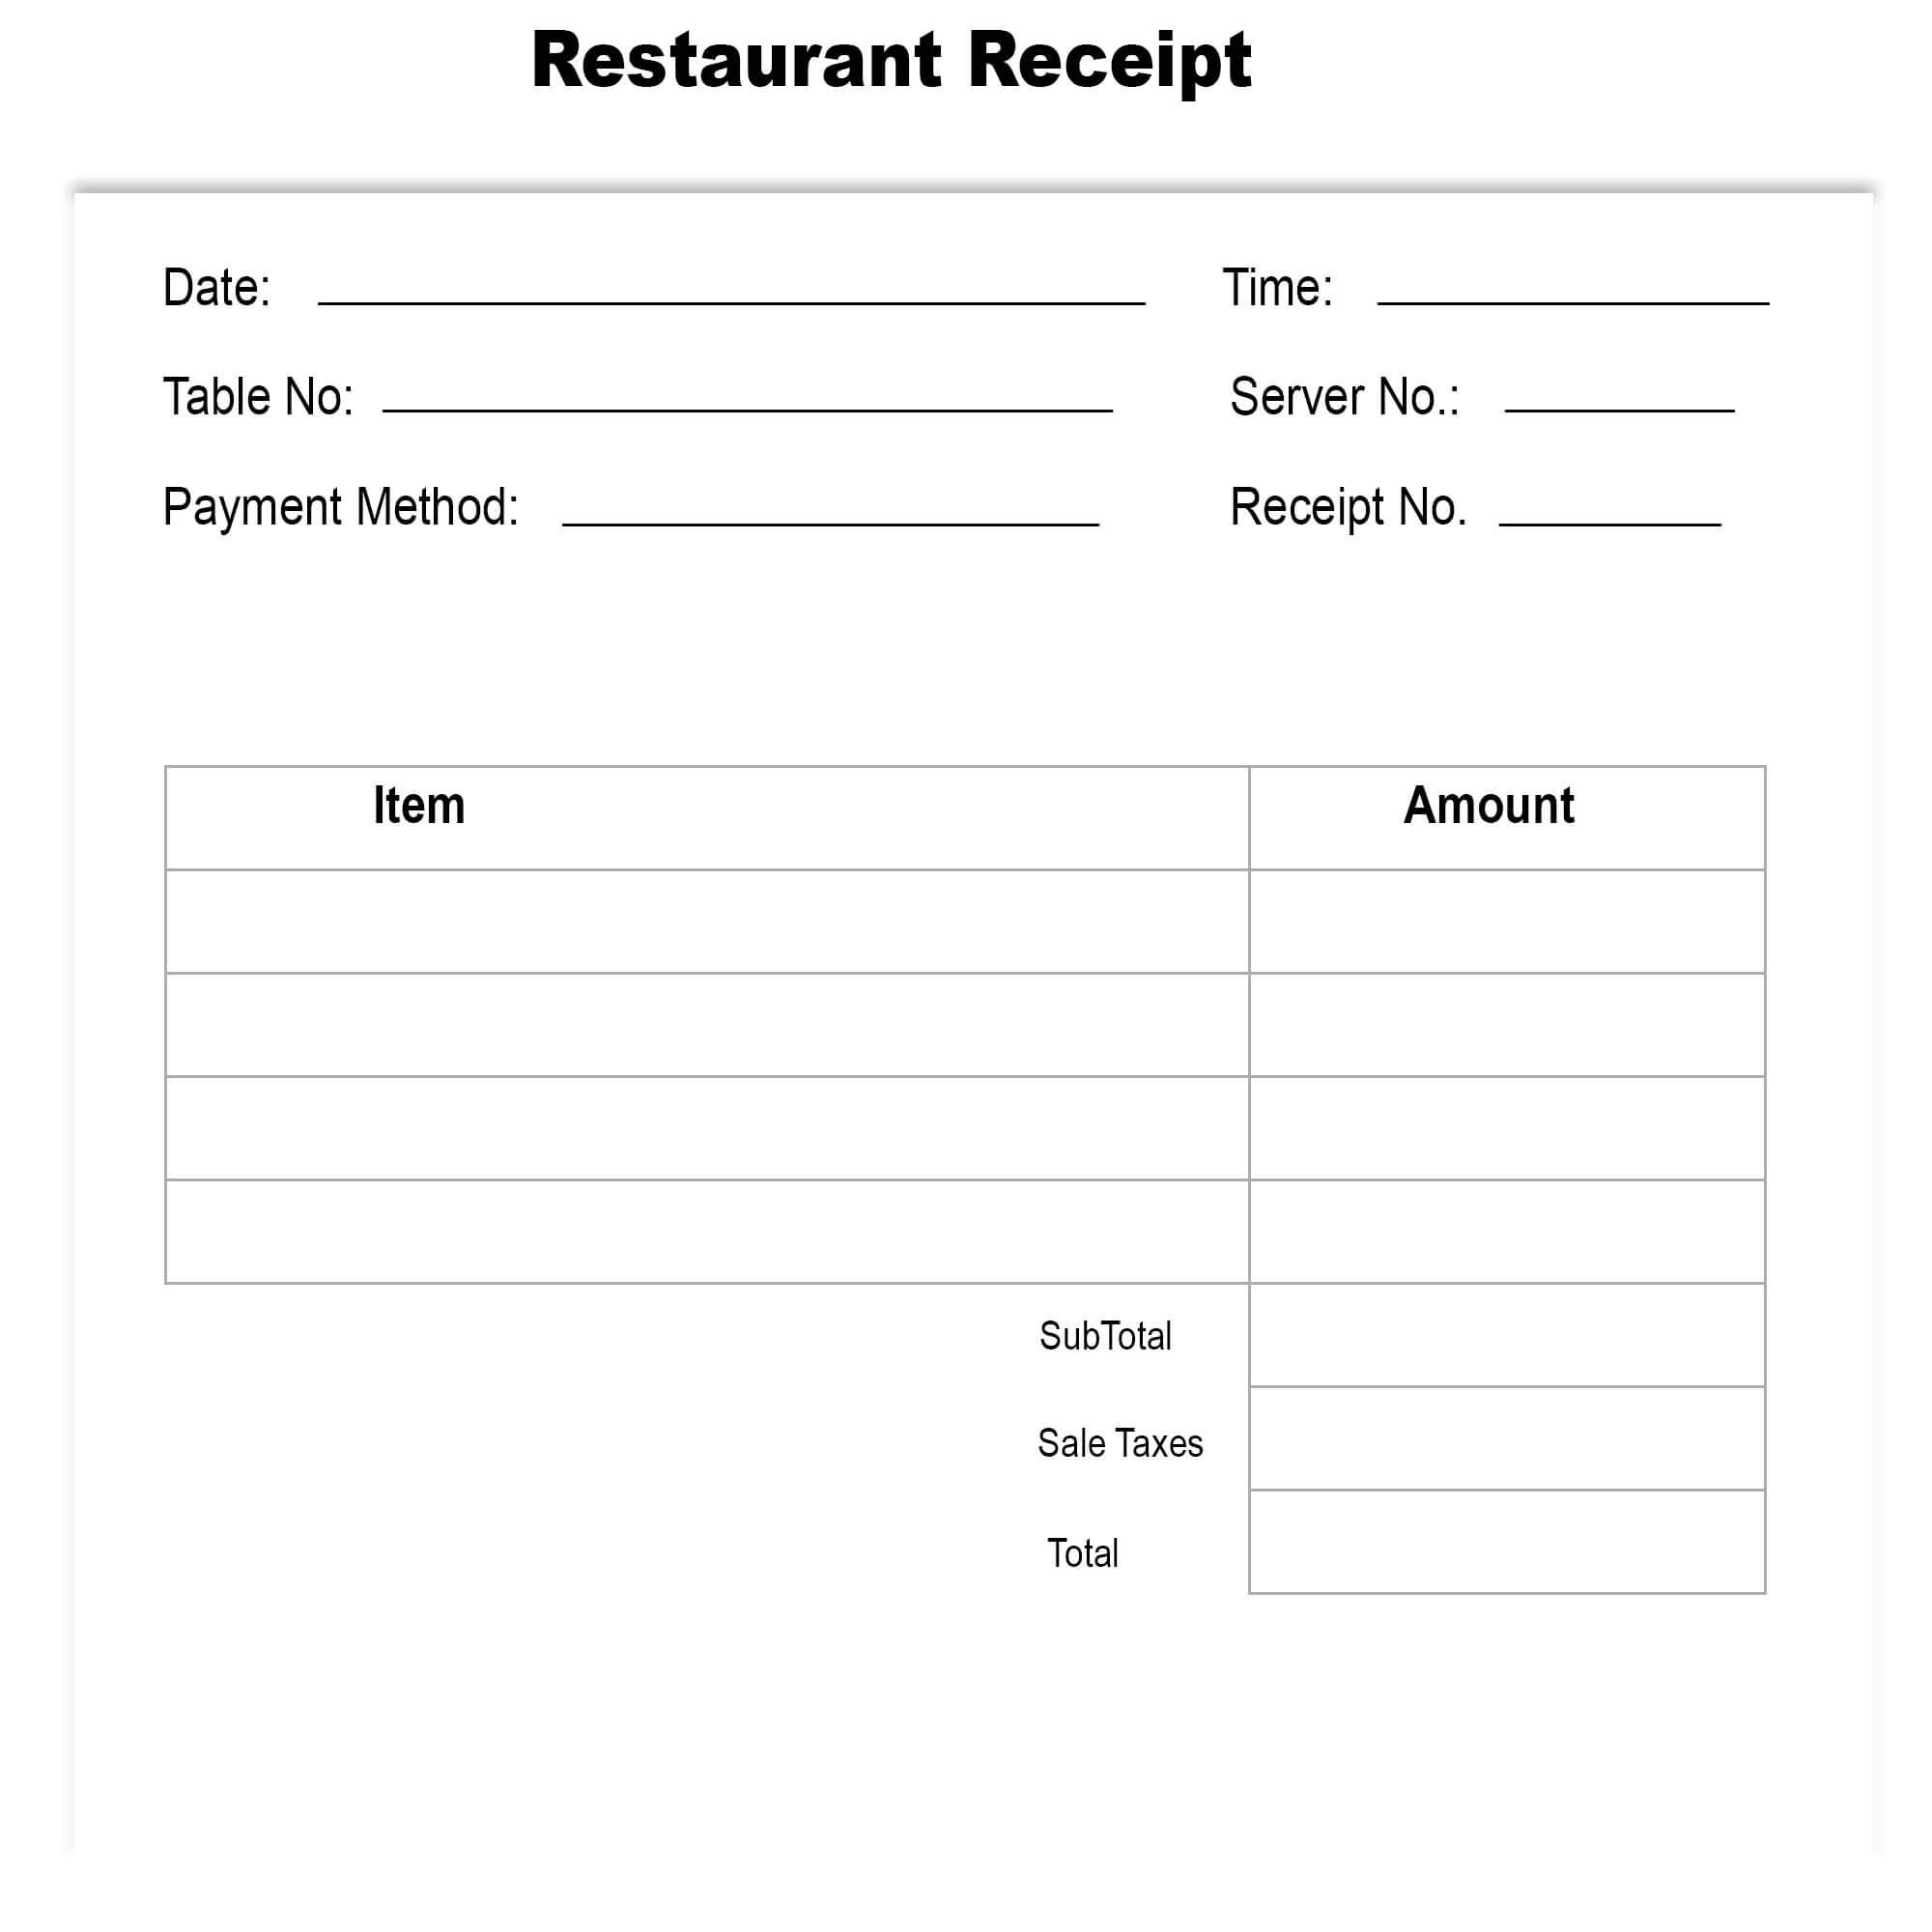 Restaurant Receipt Template Excel | The Receipt Template With Blank Taxi Receipt Template